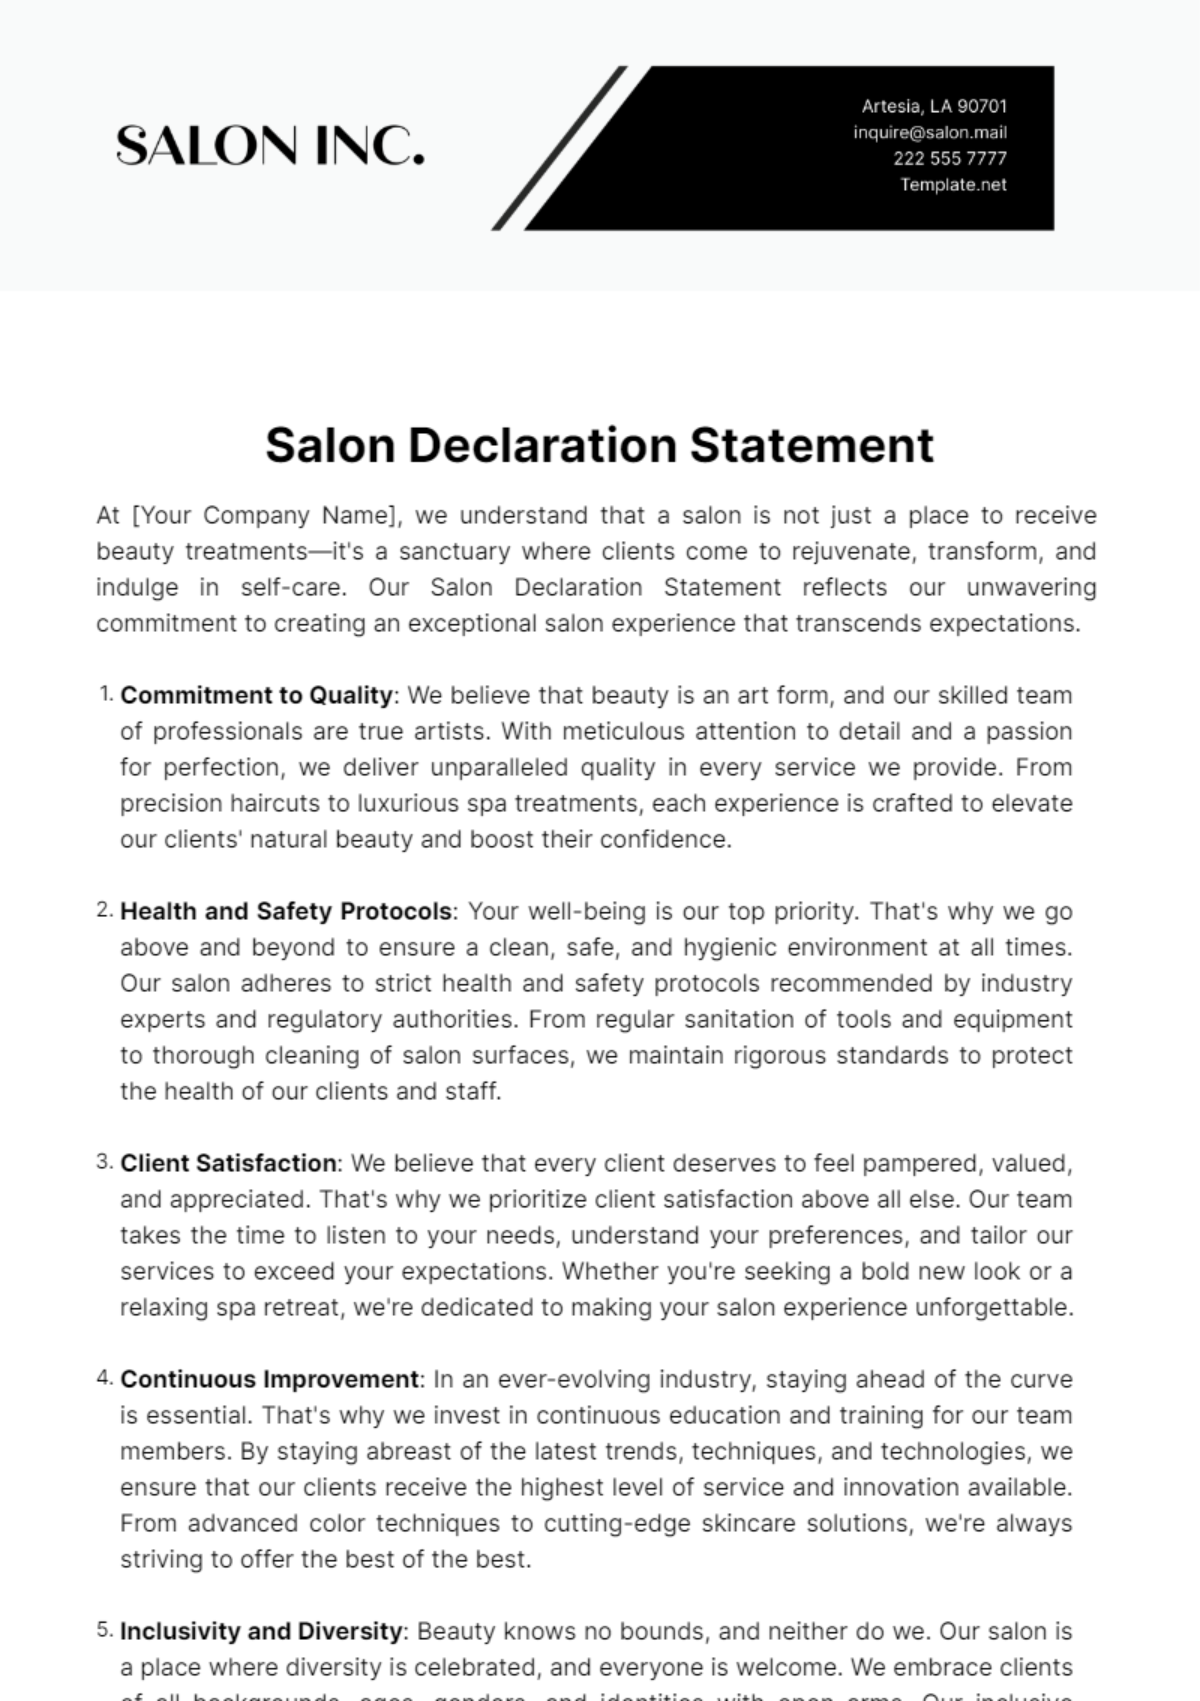 Salon Declaration Statement Template